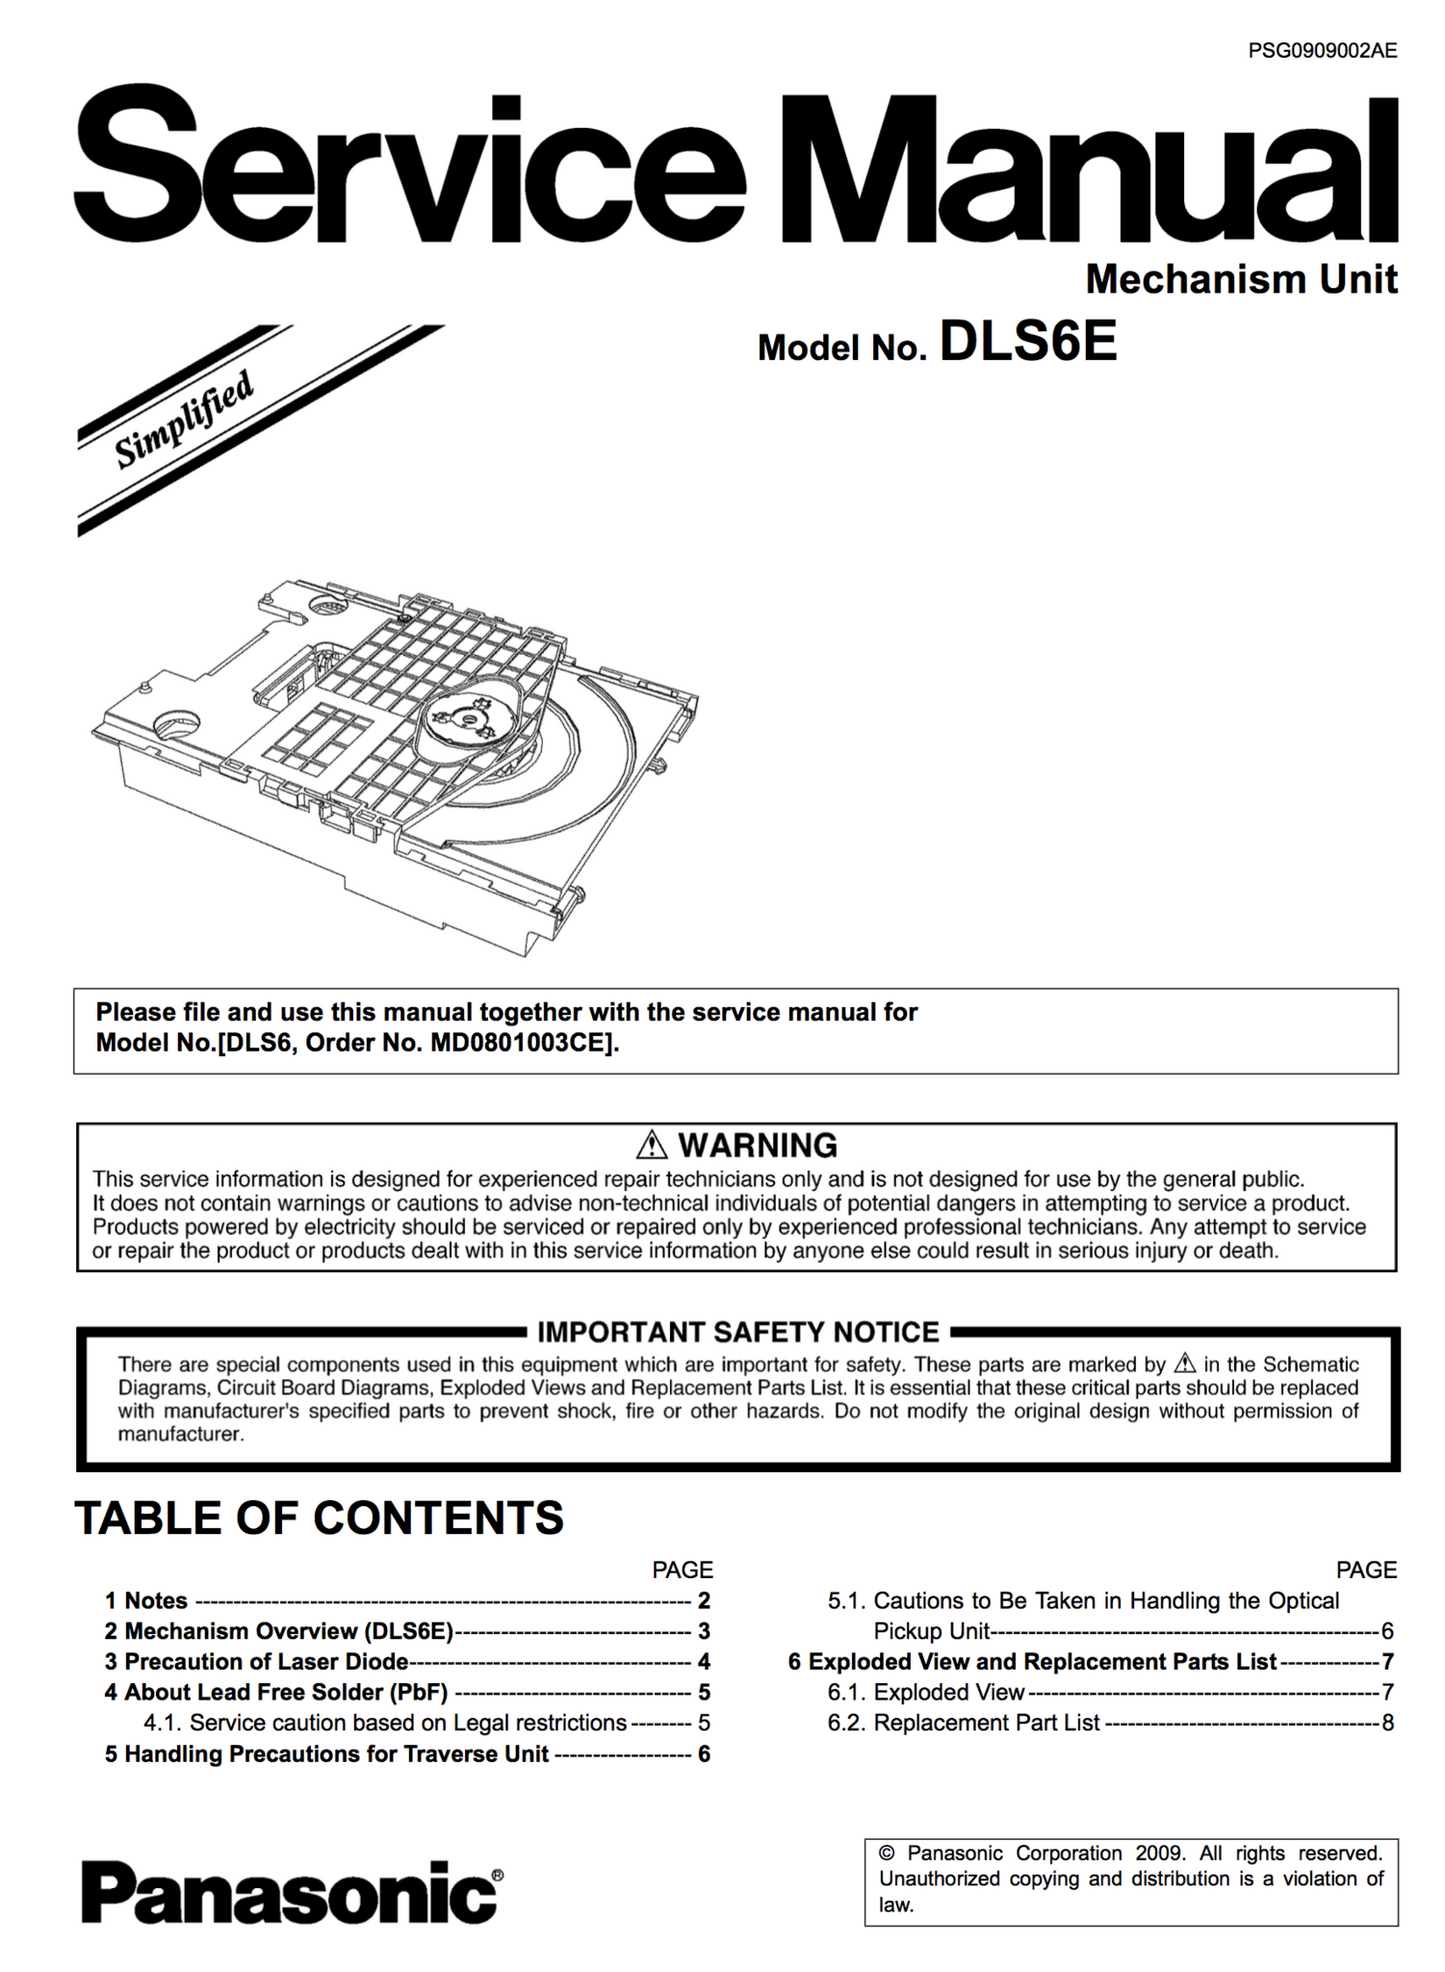 Panasonic DLS6E Service Manual